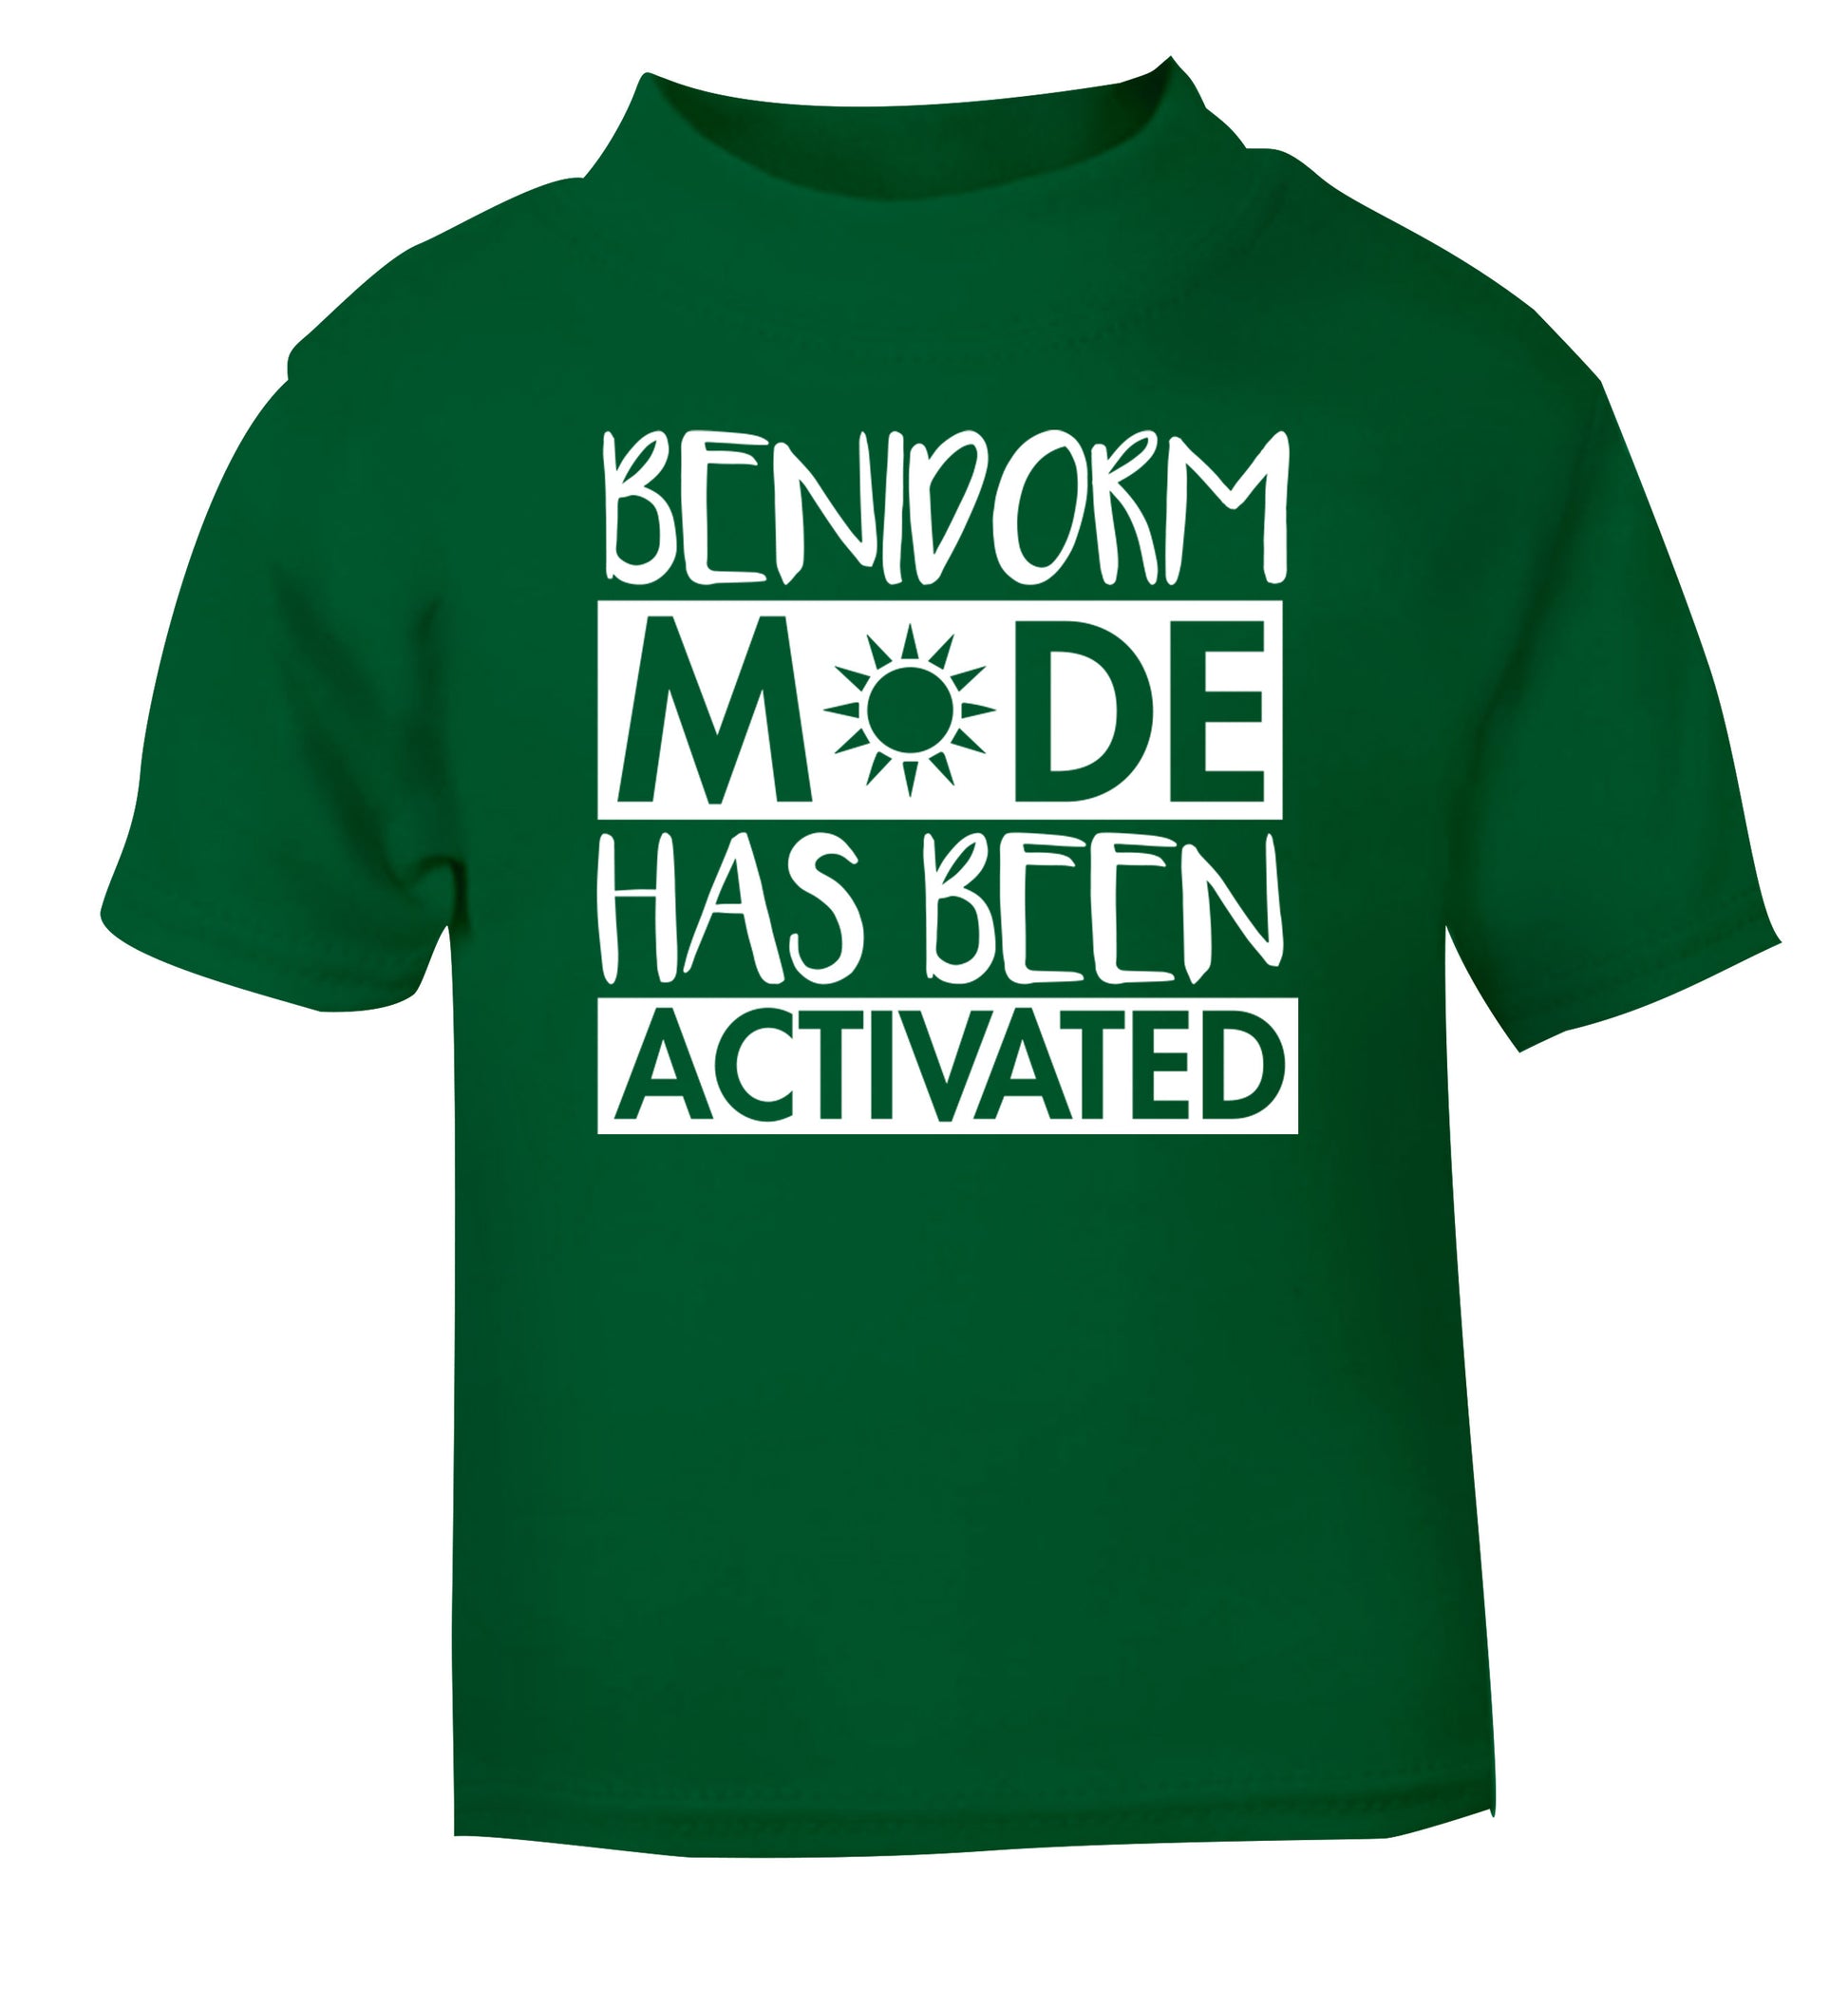 Benidorm mode has been activated green Baby Toddler Tshirt 2 Years